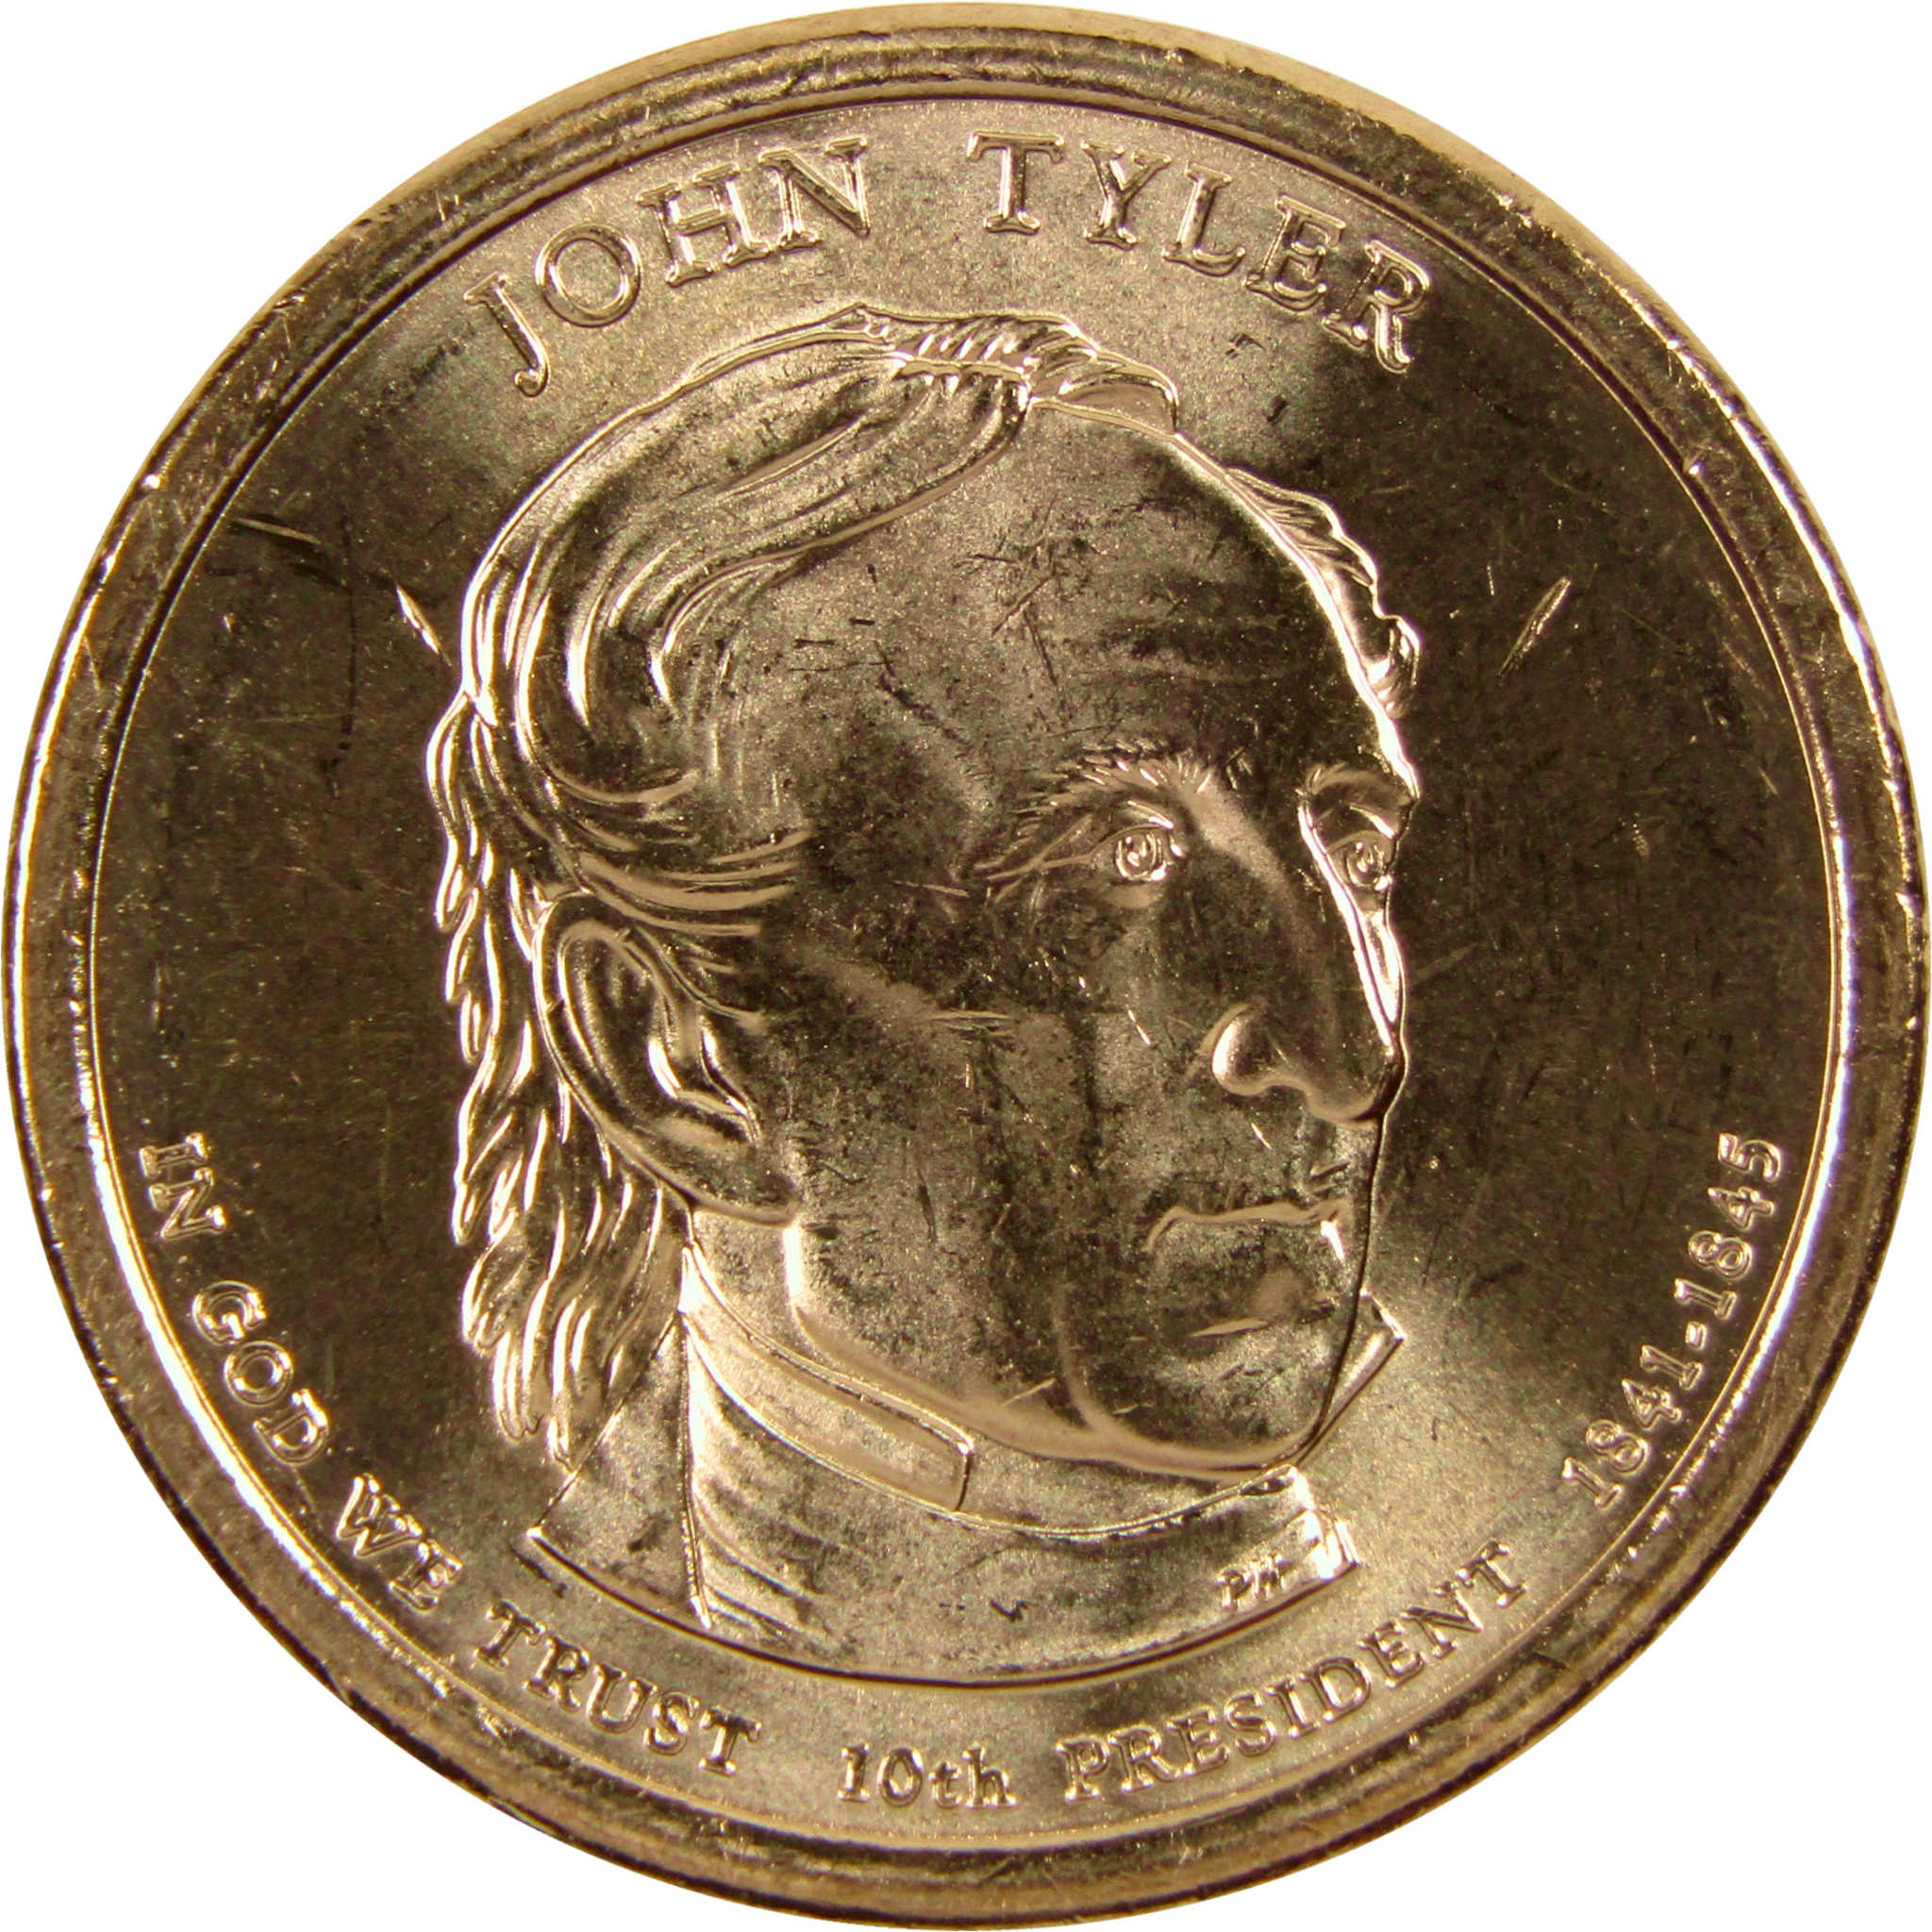 2009 D John Tyler Presidential Dollar BU Uncirculated $1 Coin